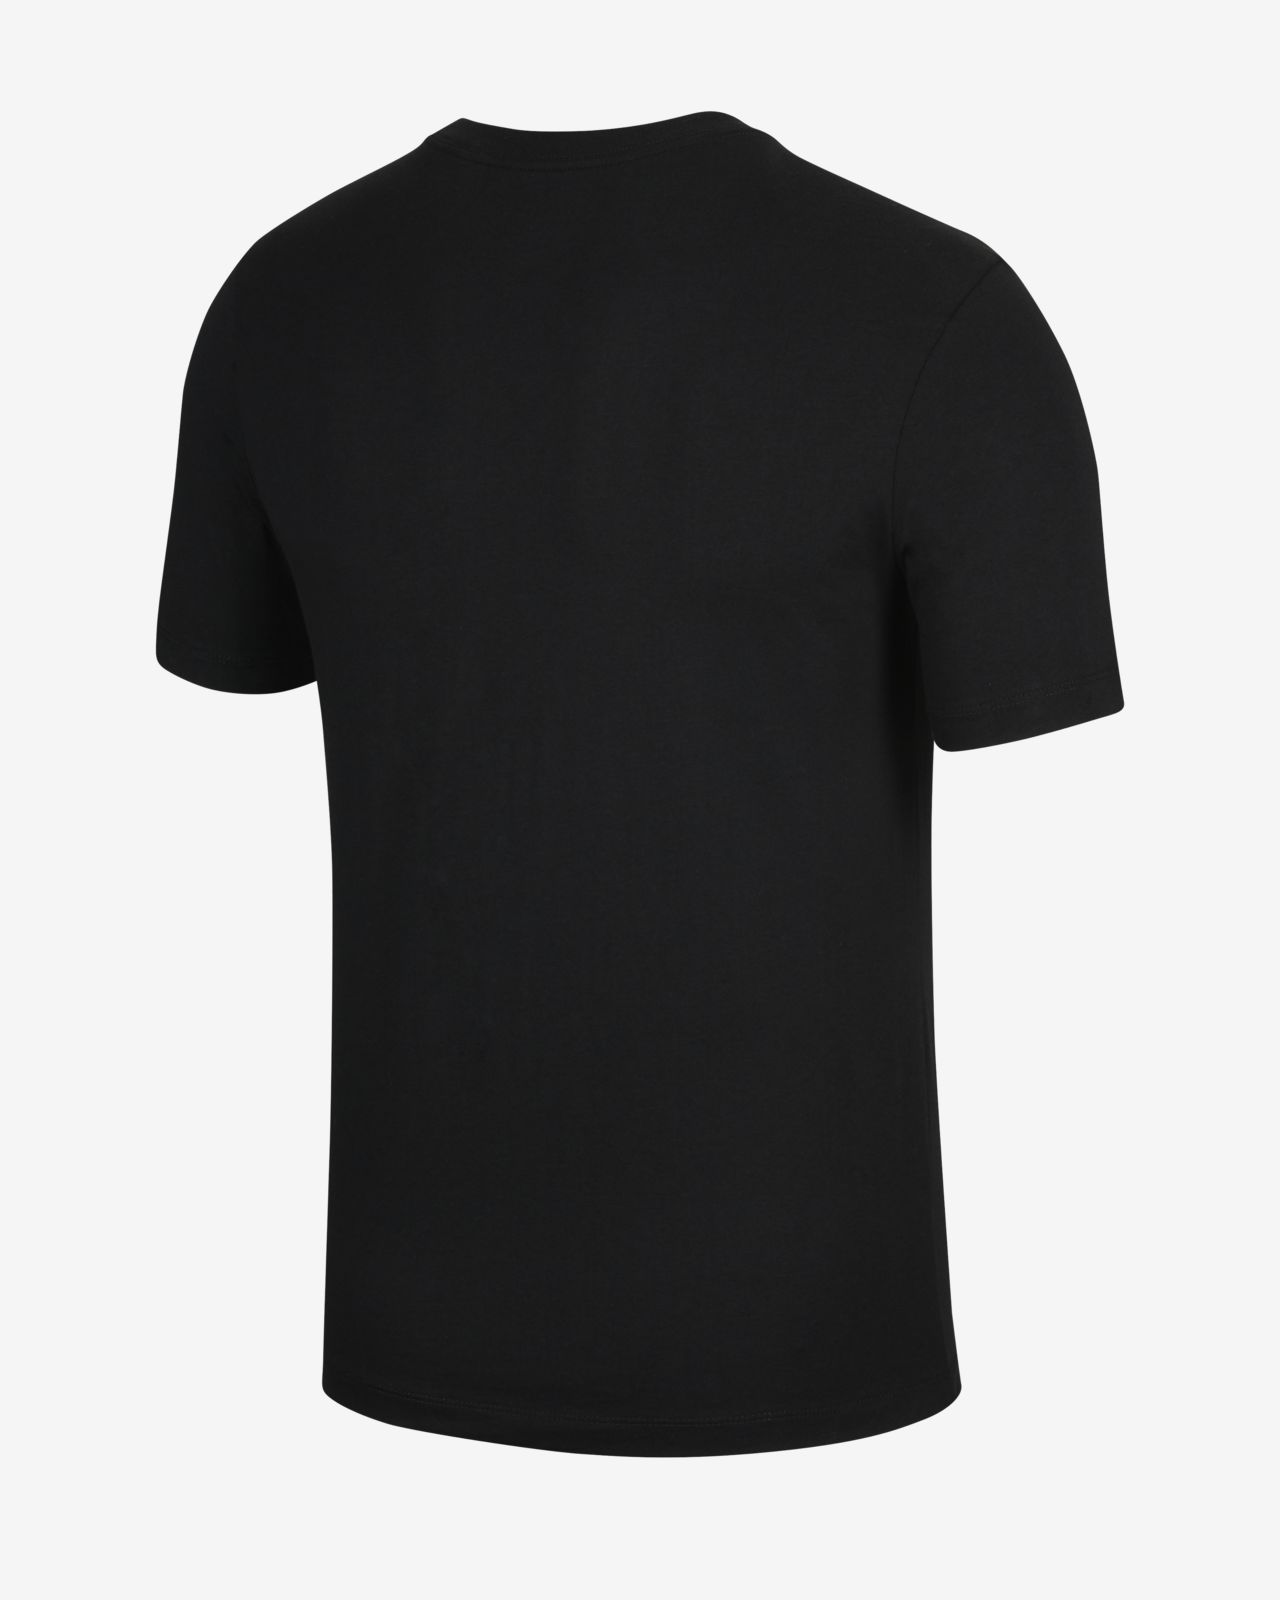 Nike Men S T Shirt Size Chart